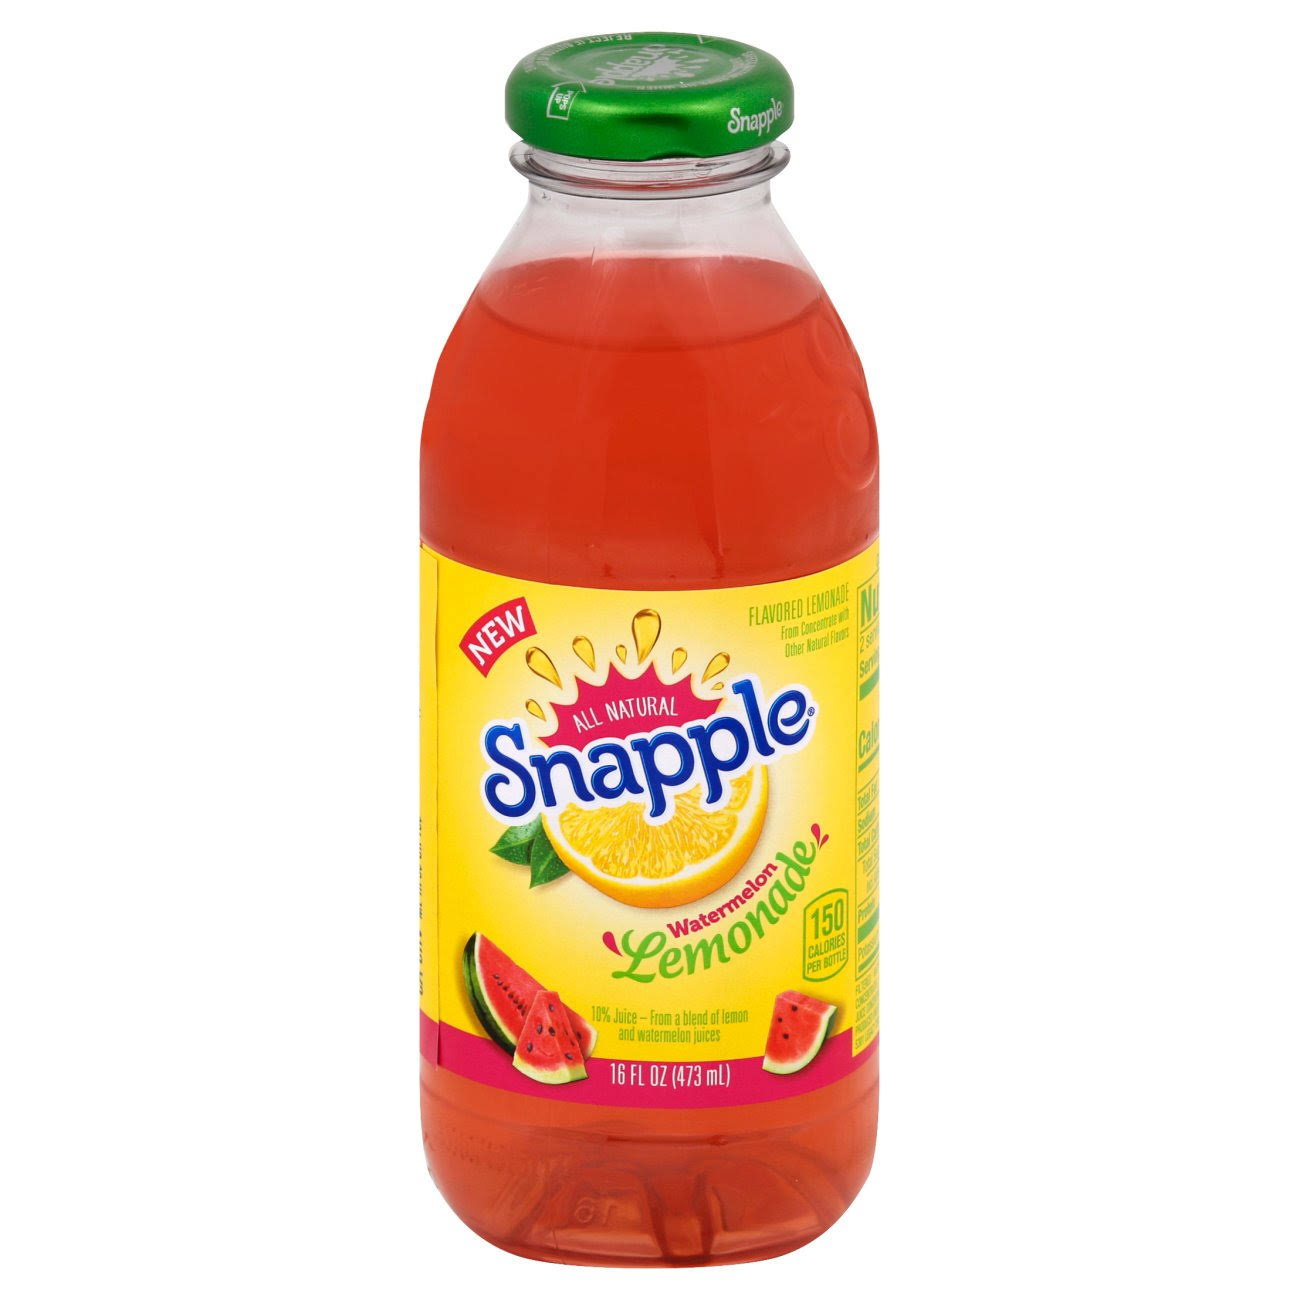 Snapple Lemonade, Watermelon - 16 fl oz